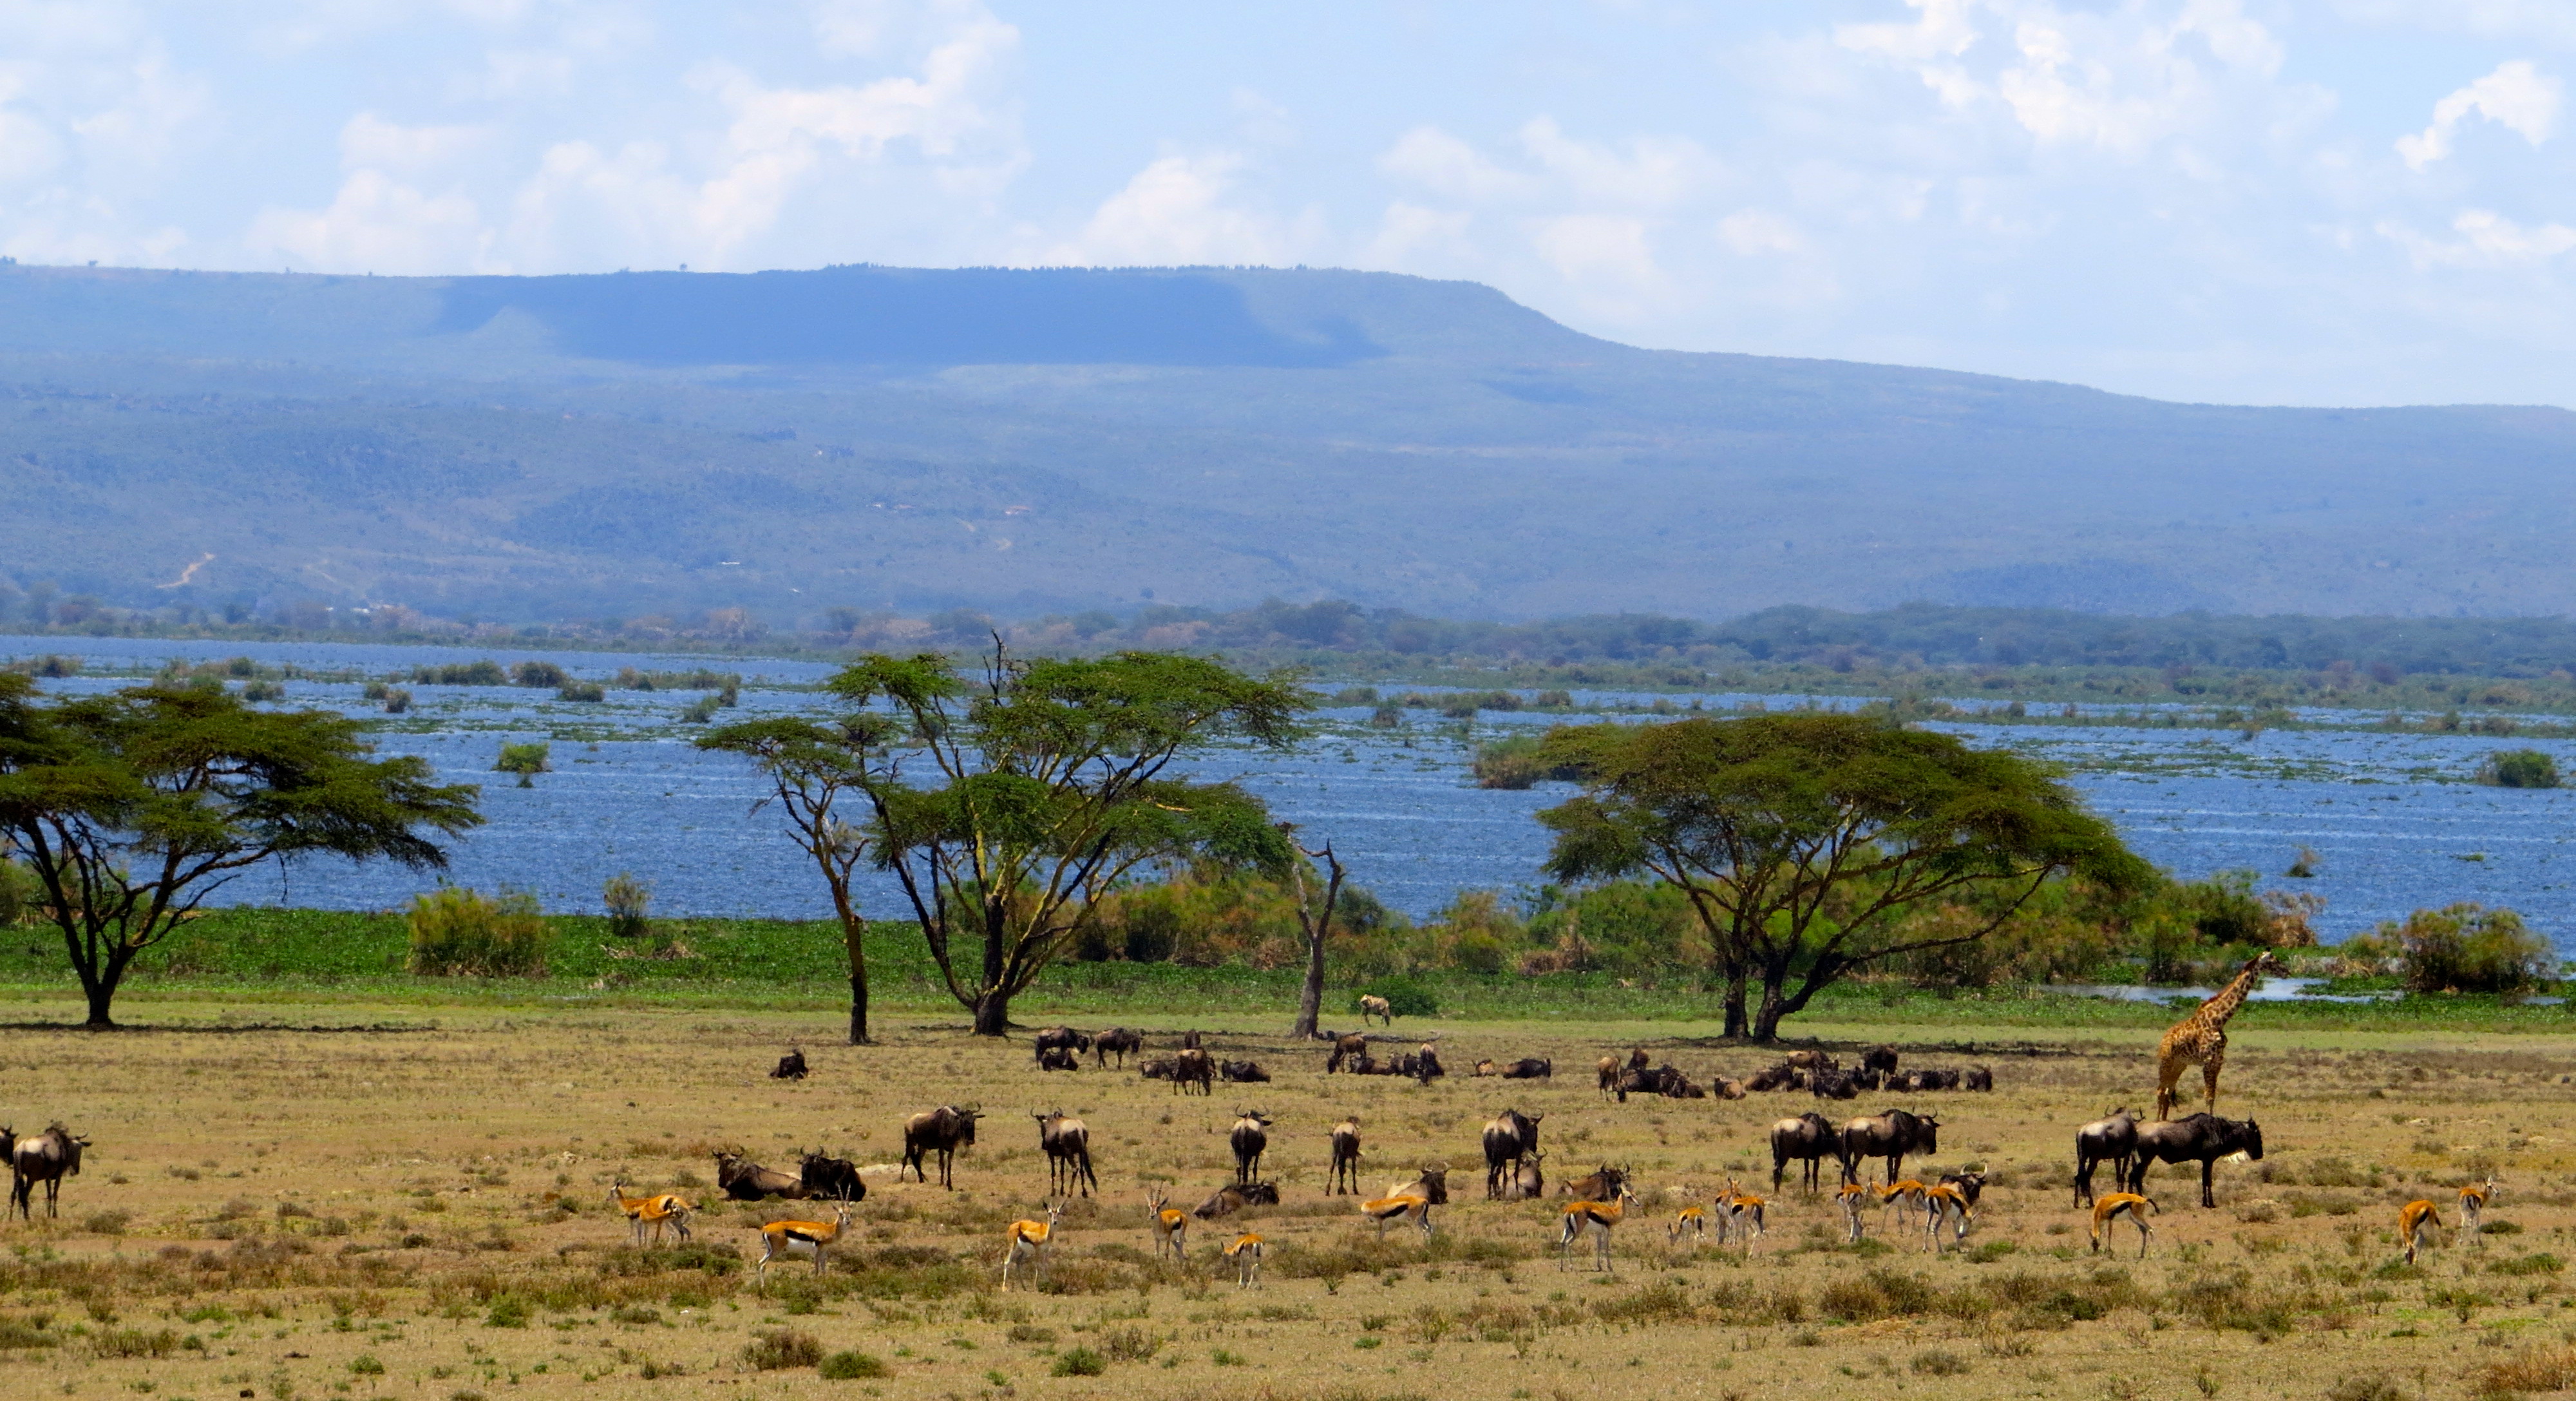 Wildlife at Crescent Island, Lake Naivasha in Kenya. Photo taken on October 20, 2013.